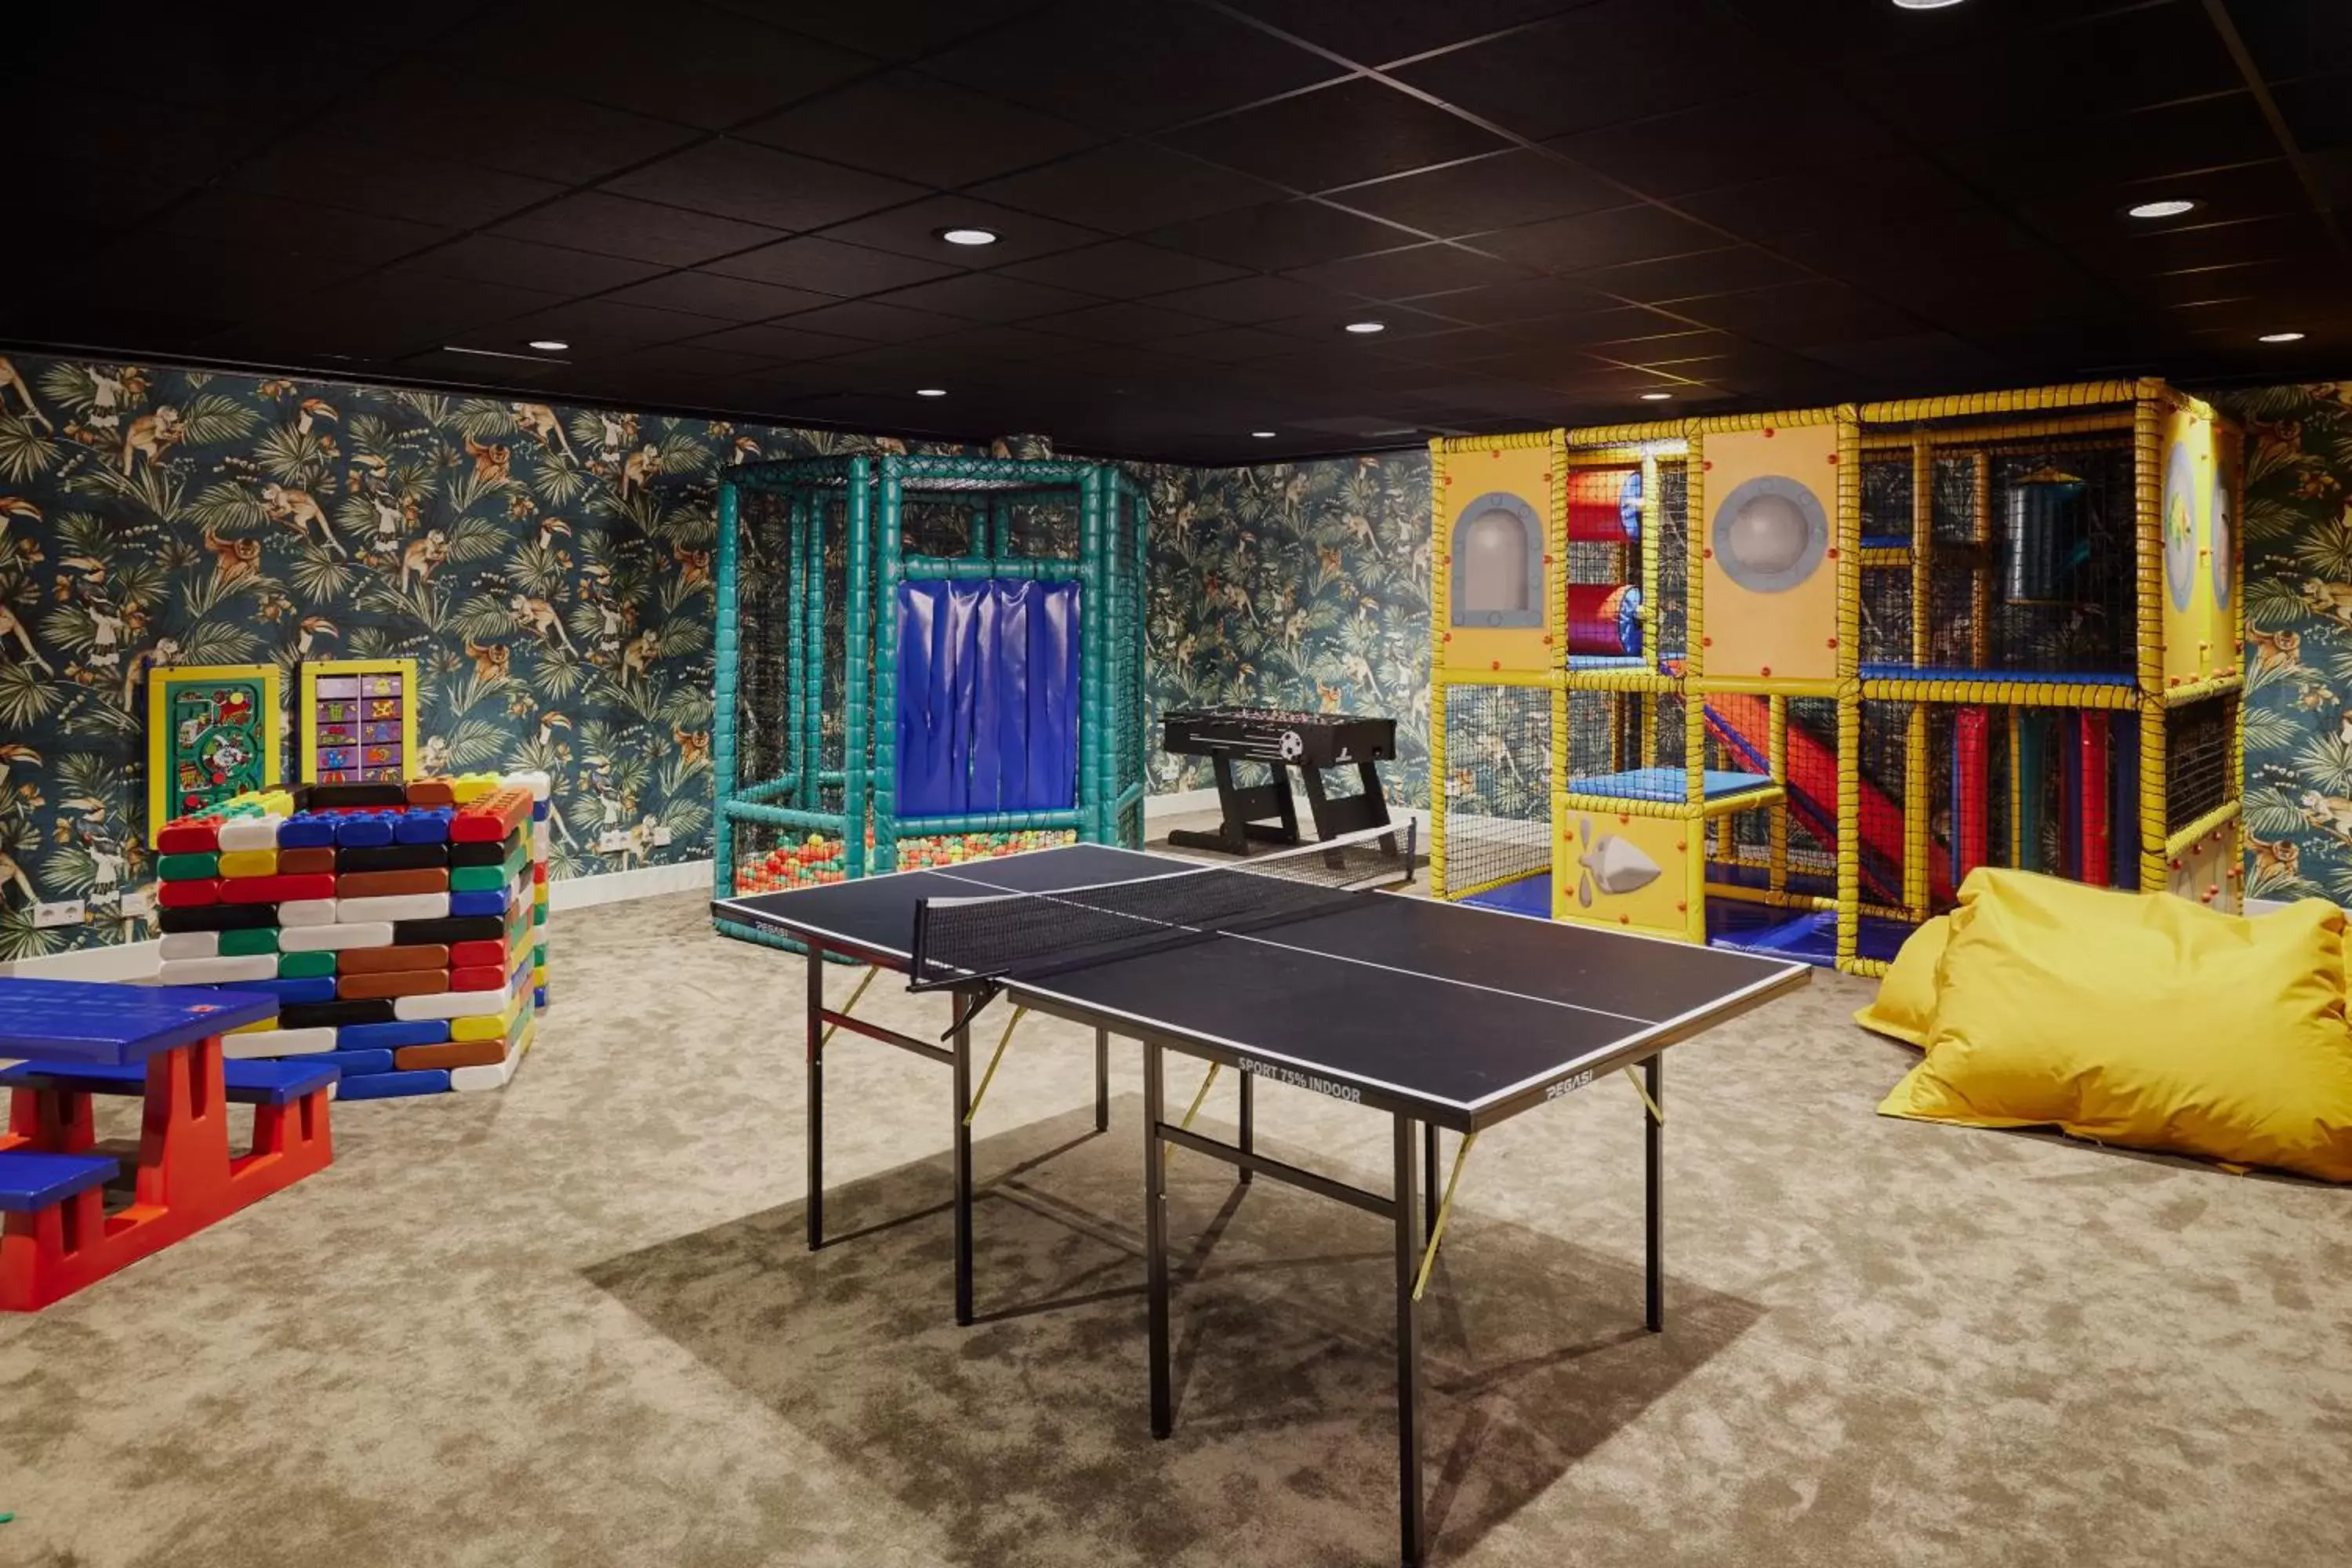 Kids's club, Table Tennis in Van der Valk Palace Hotel Noordwijk